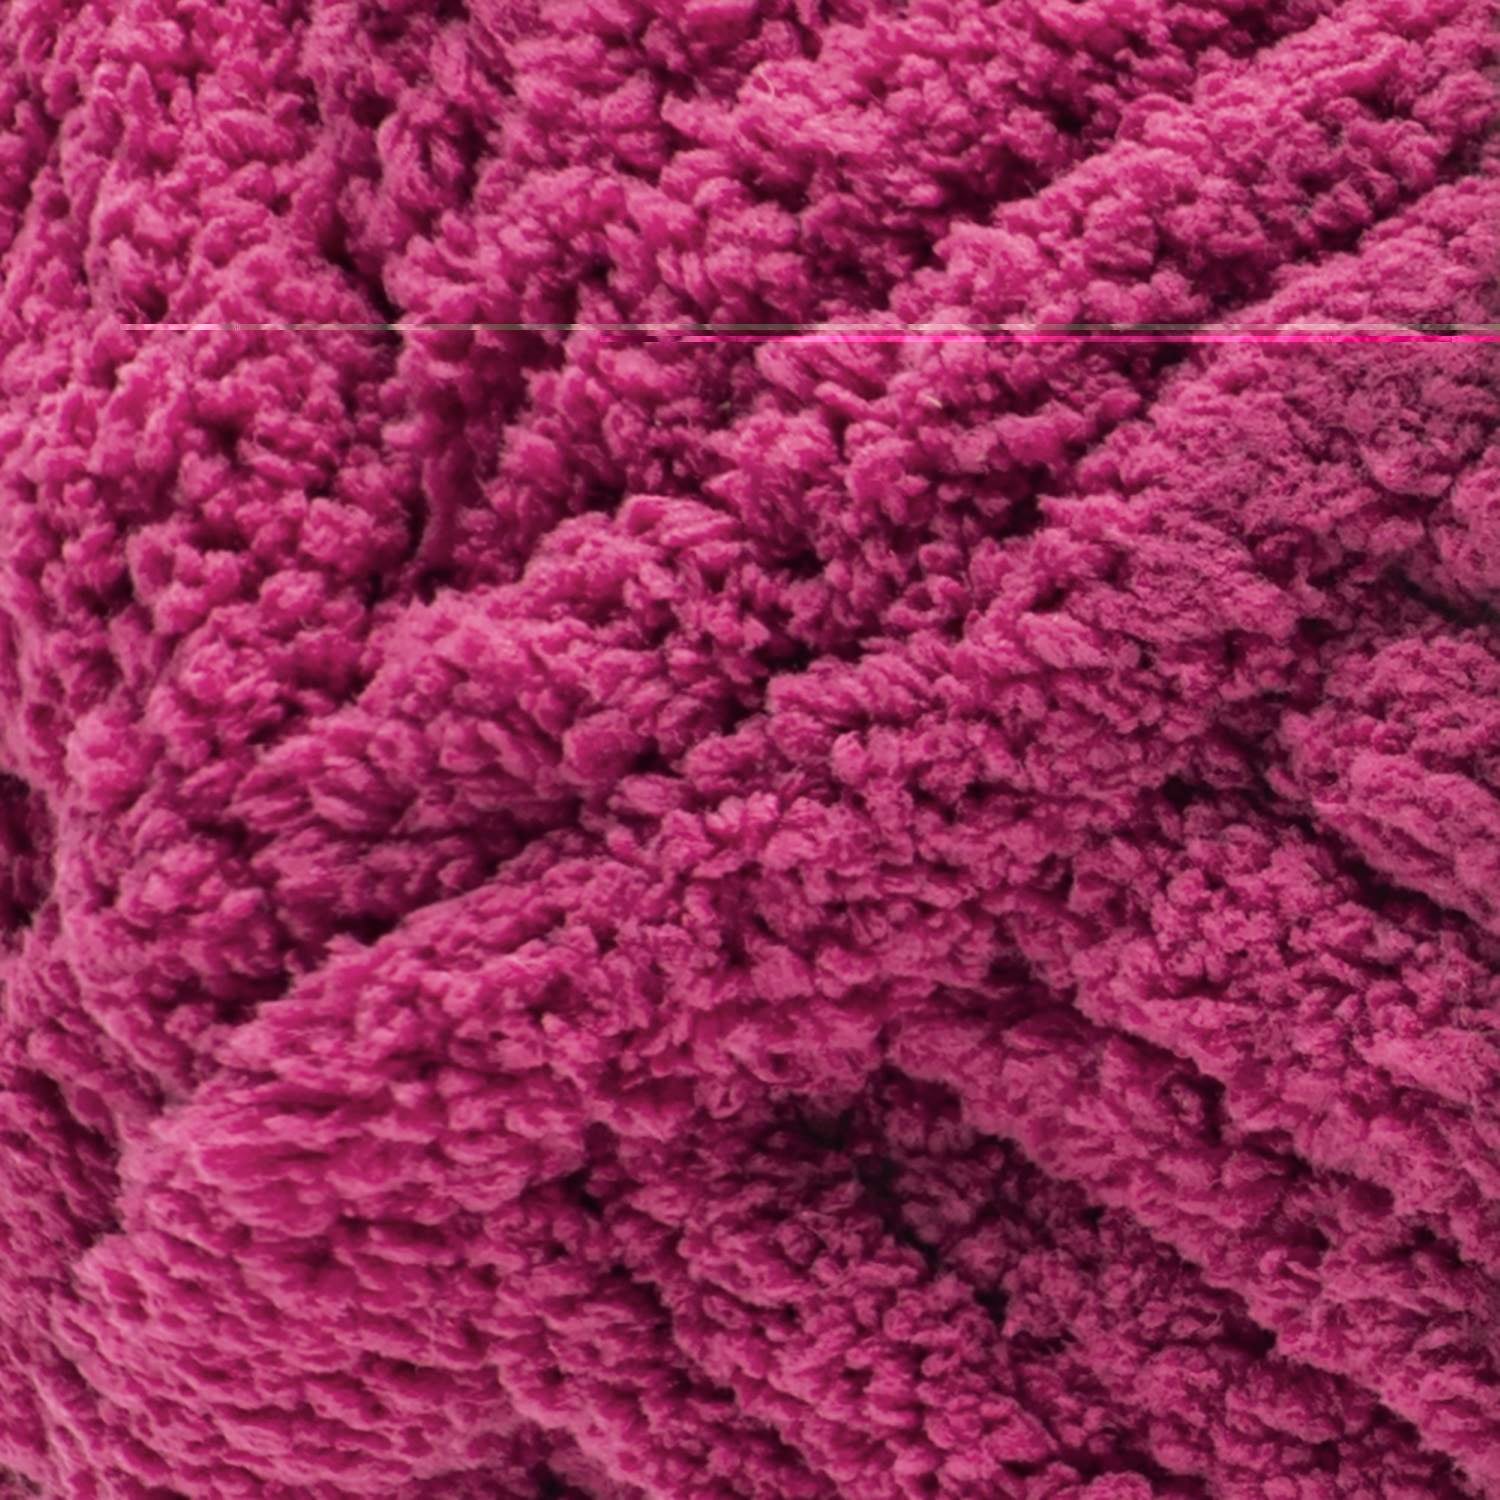 Bernat Blanket Extra Thick Yarn (600g/21.2oz) - Discontinued Shades Fucshia